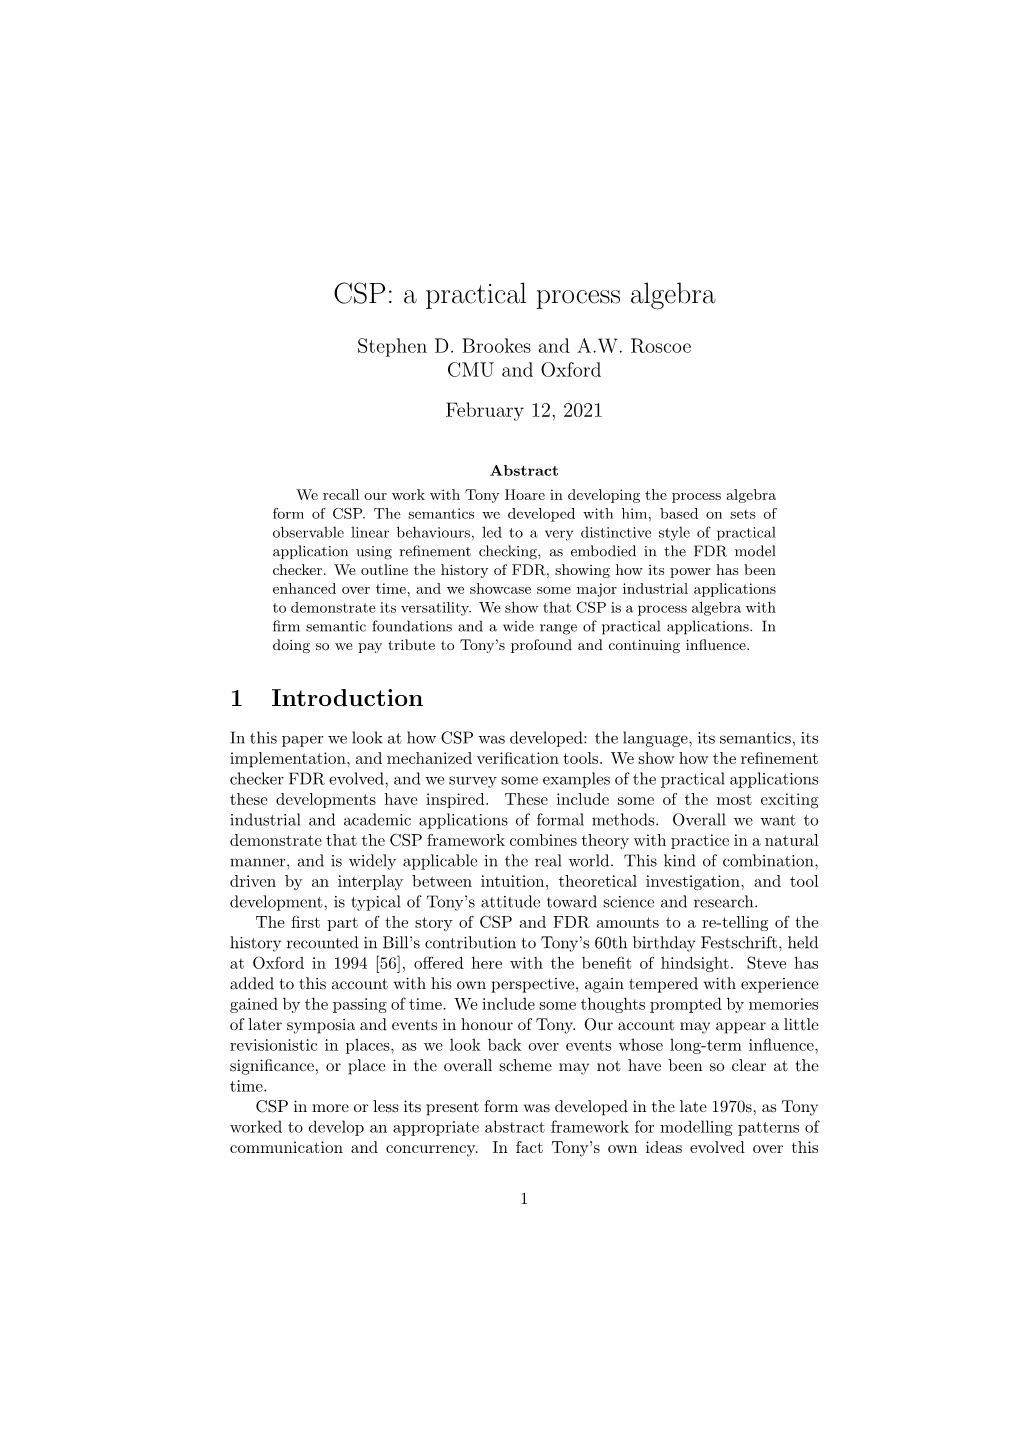 CSP: a Practical Process Algebra